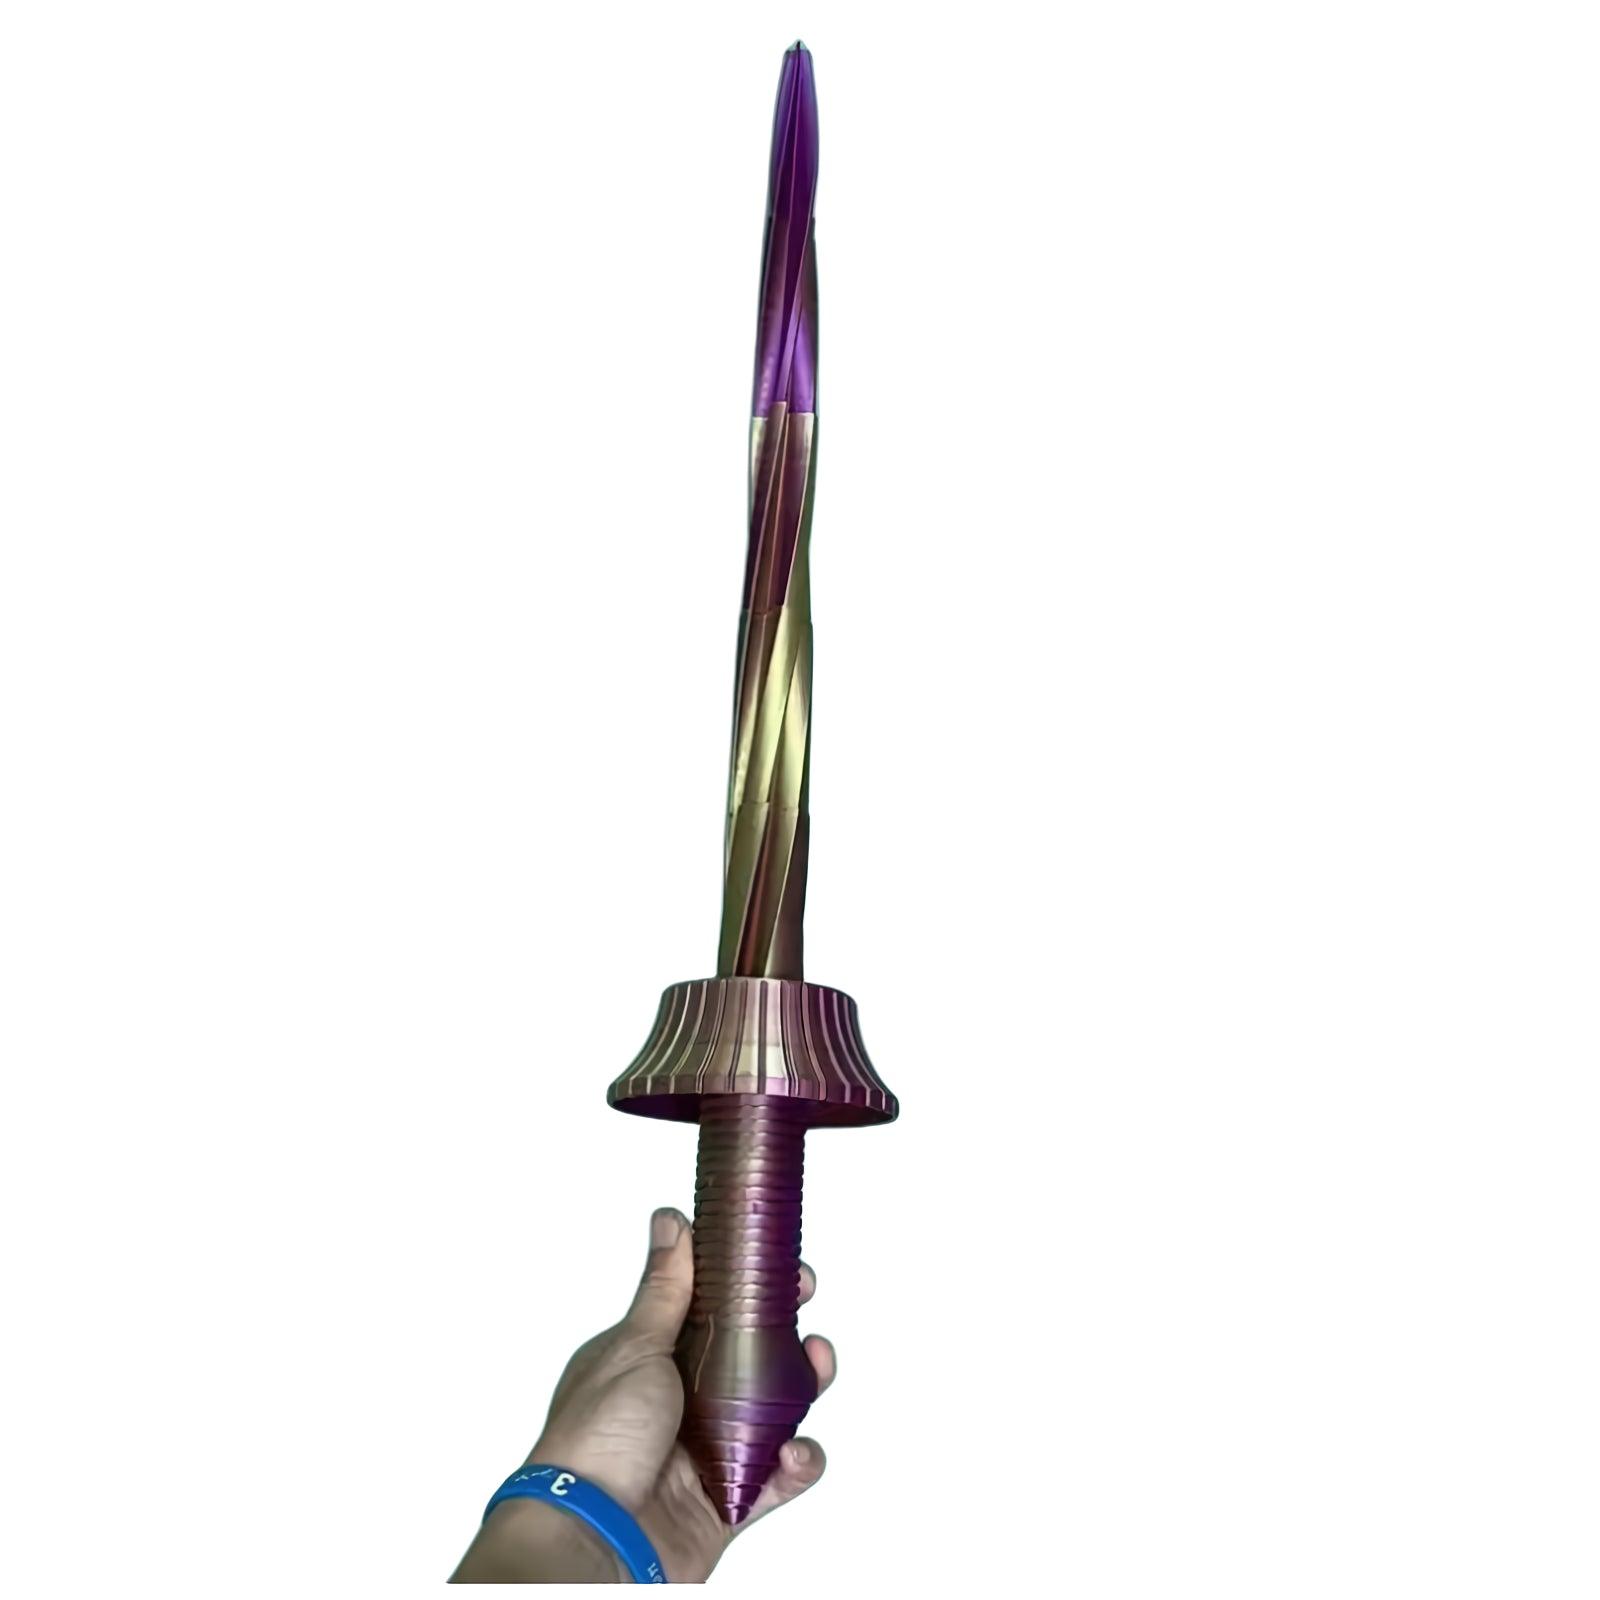 3D Printed Stylish Spiral Sword Fidget Toy Gravity Knife Toy